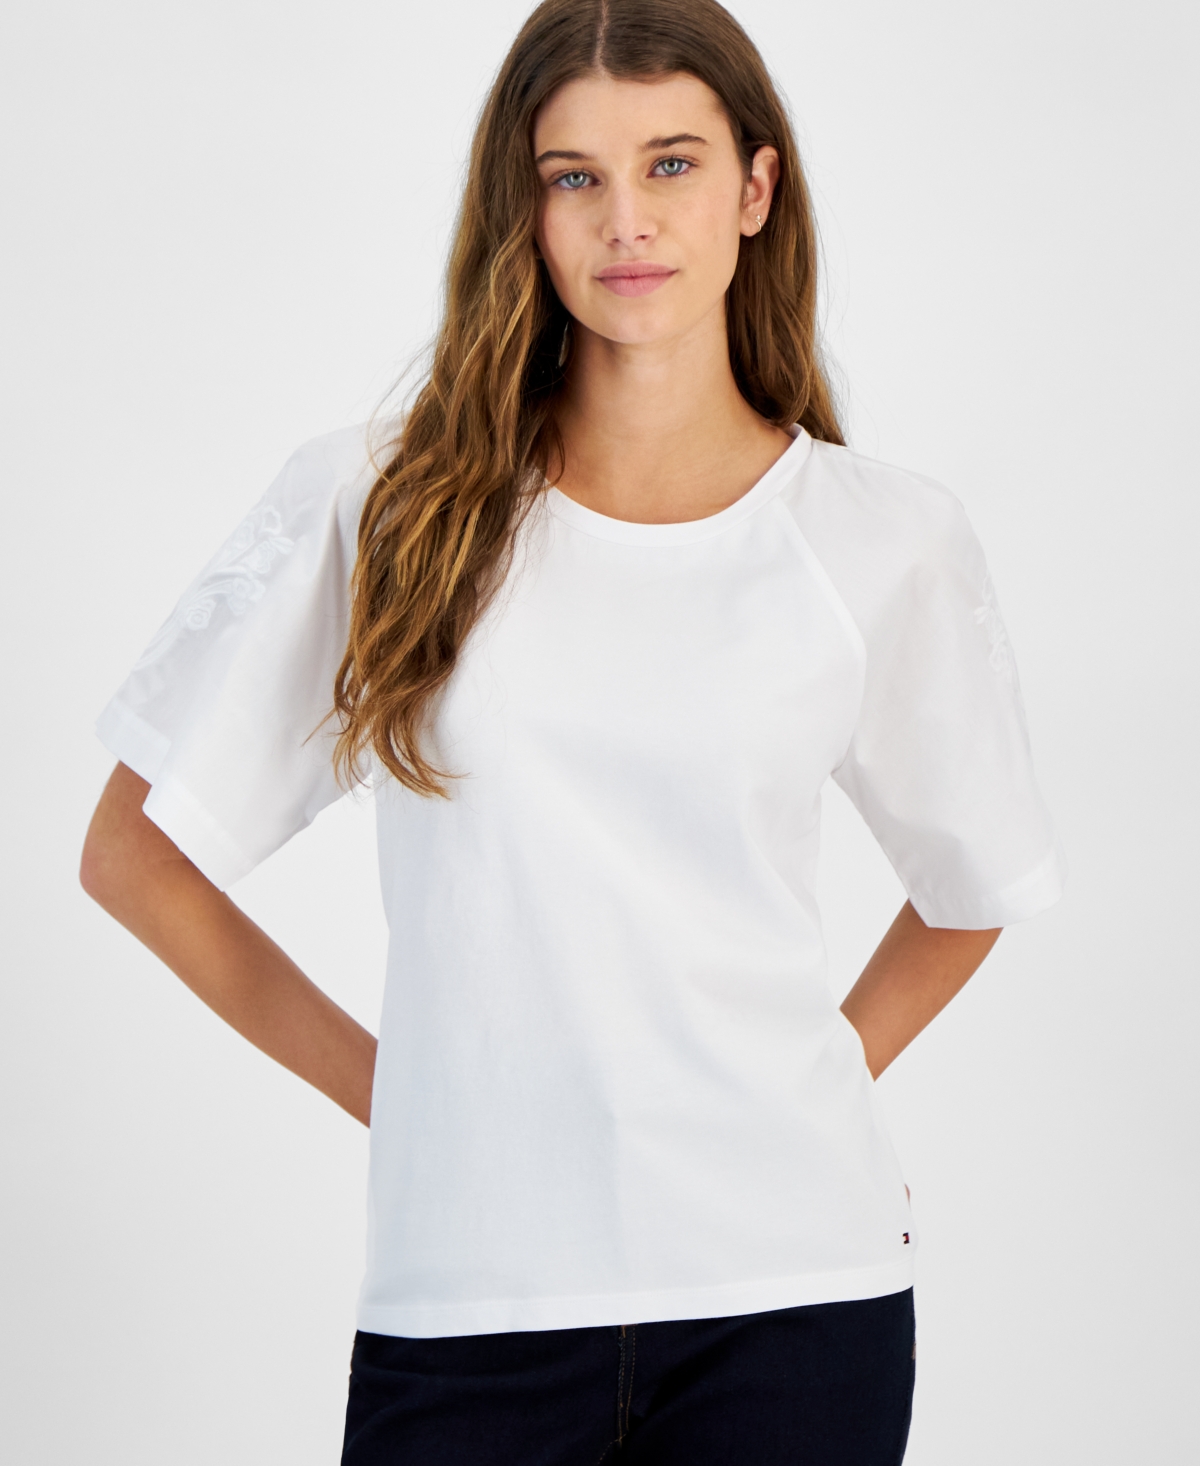 Women's Crewneck Embroidered-Sleeve Top - Brt White